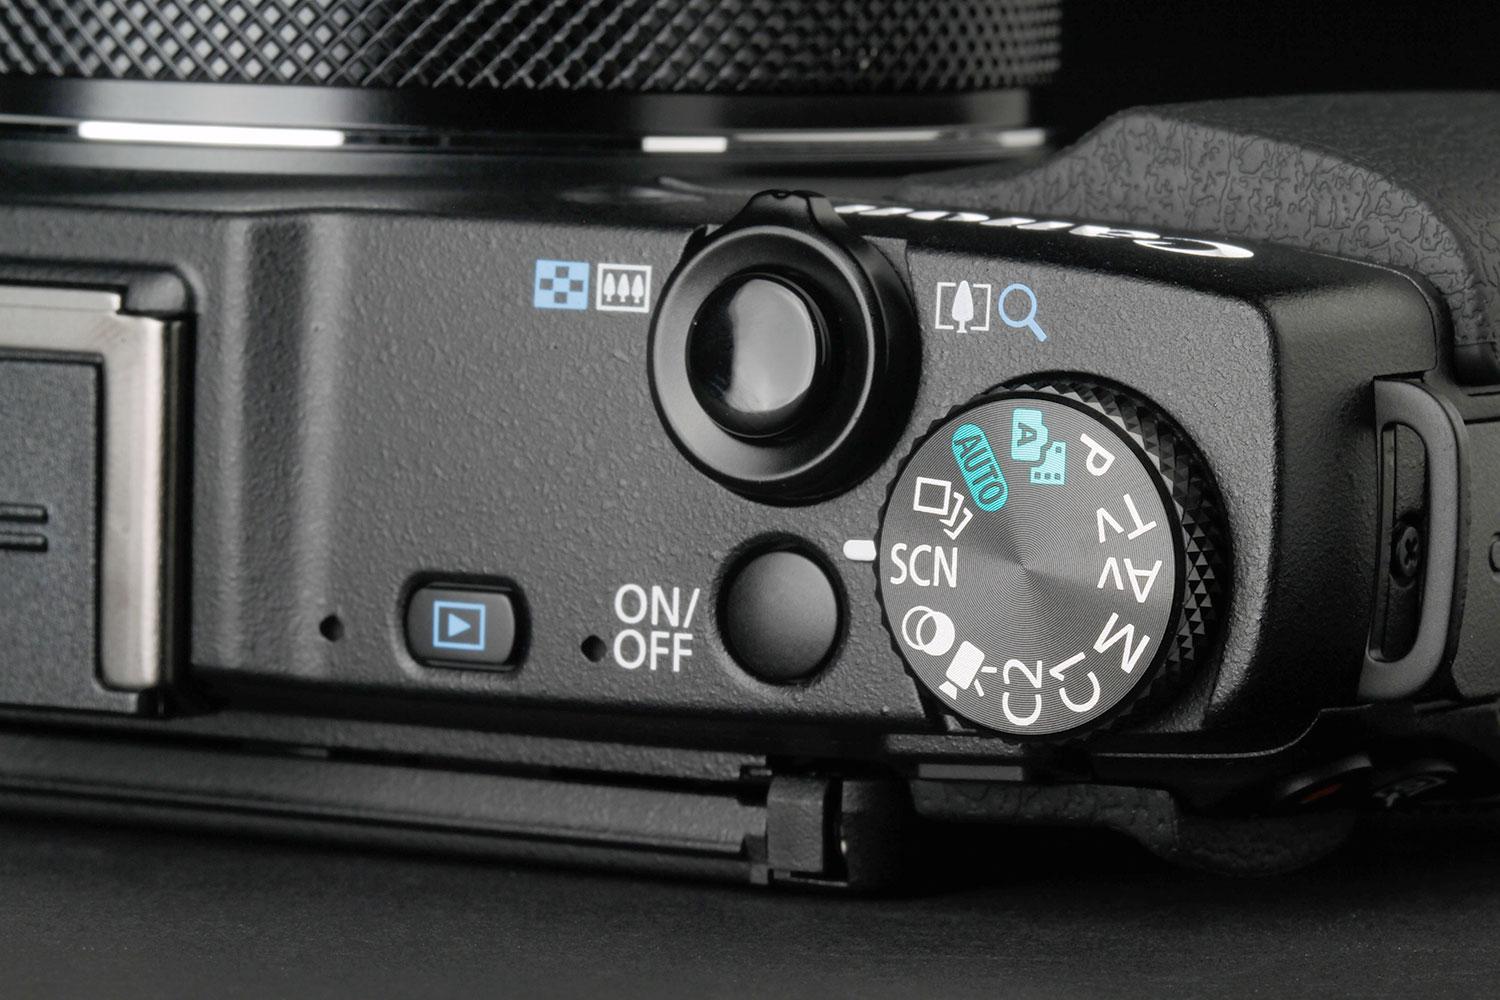 Canon Powershot G1 X Mark II review | Digital Trends